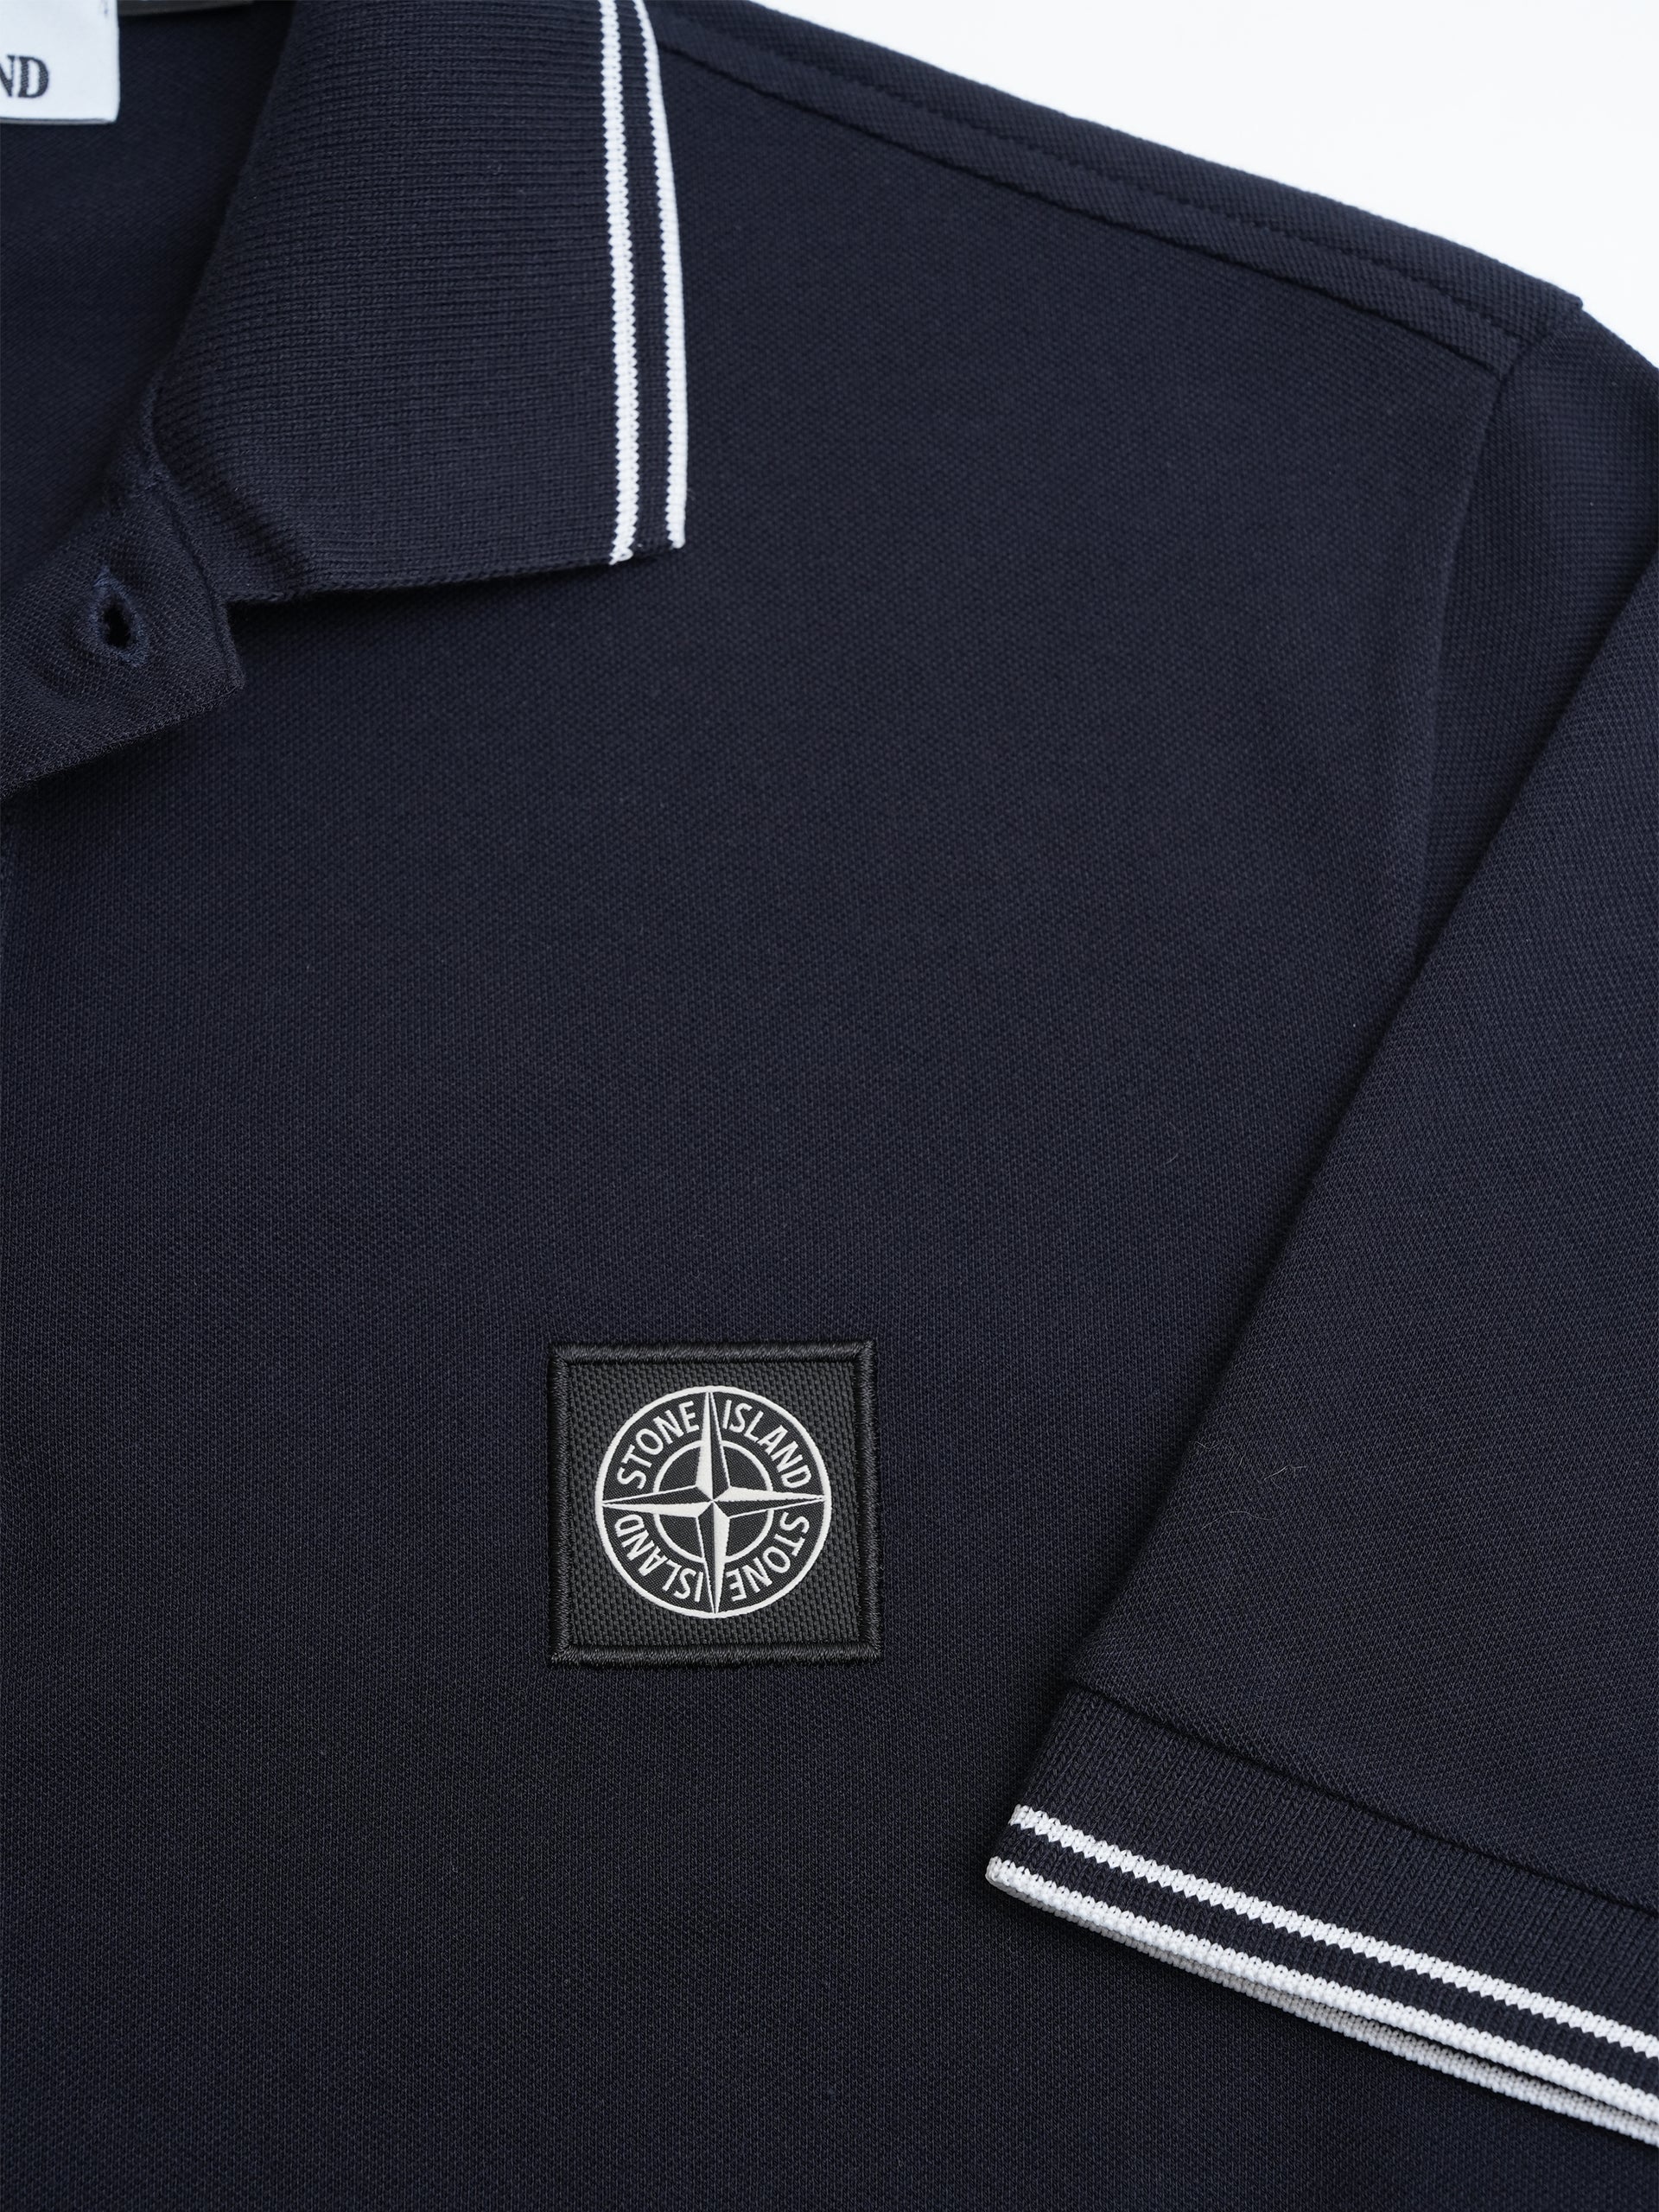 STONE ISLAND - Poloshirt mit Kompass-Patch Dunkelblau – Dark blue